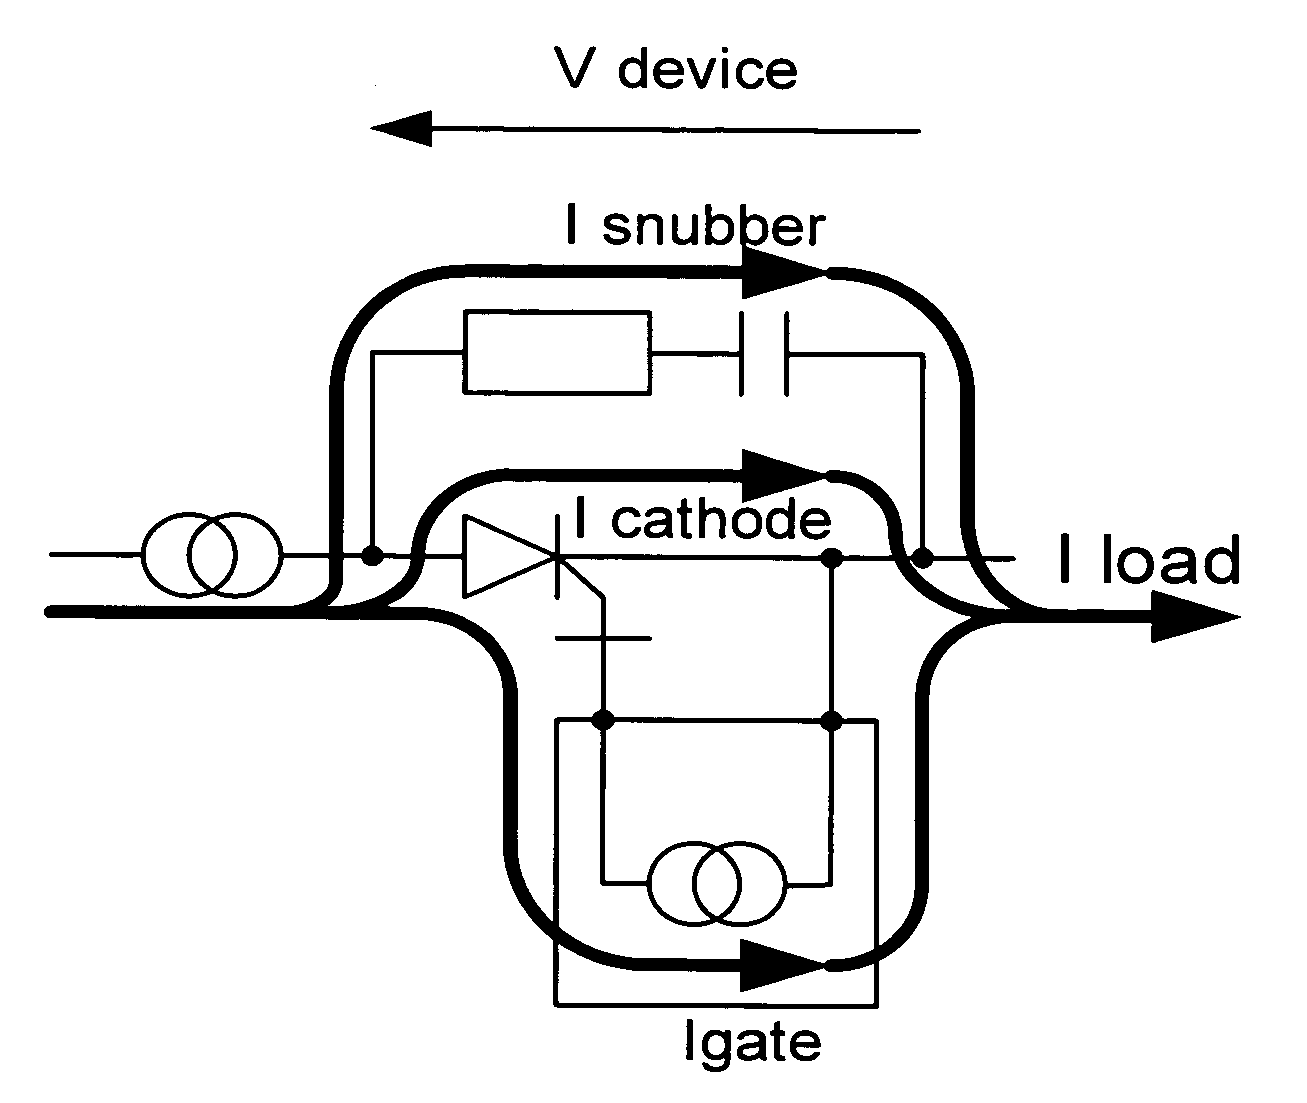 Electronic commutator circuits